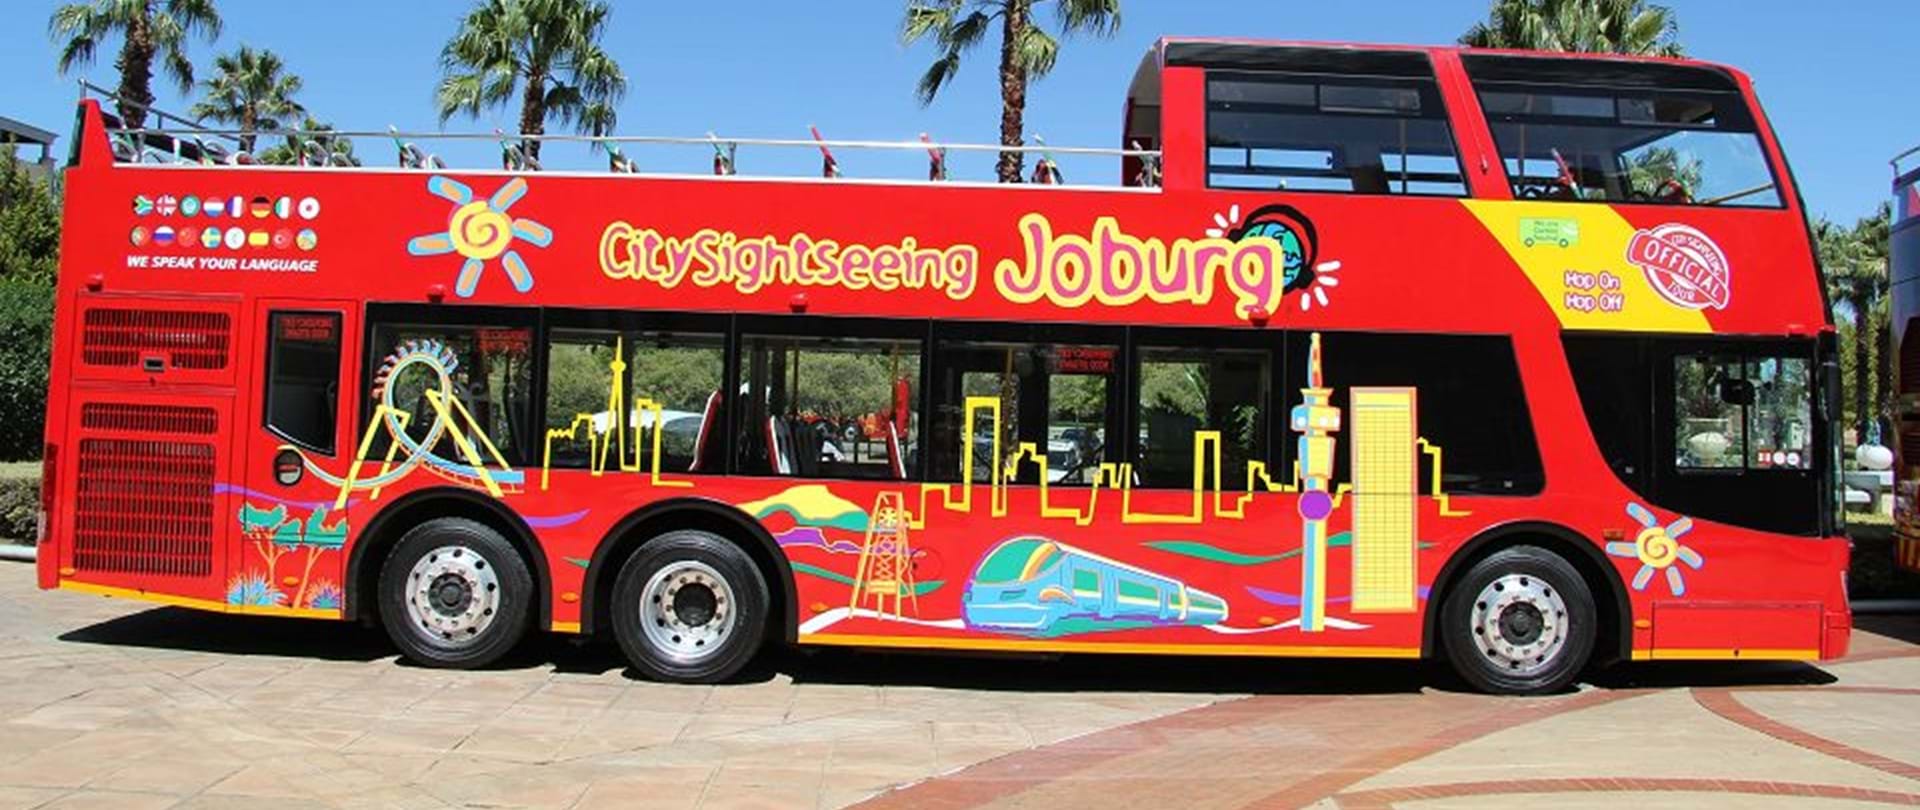 south africa tour bus